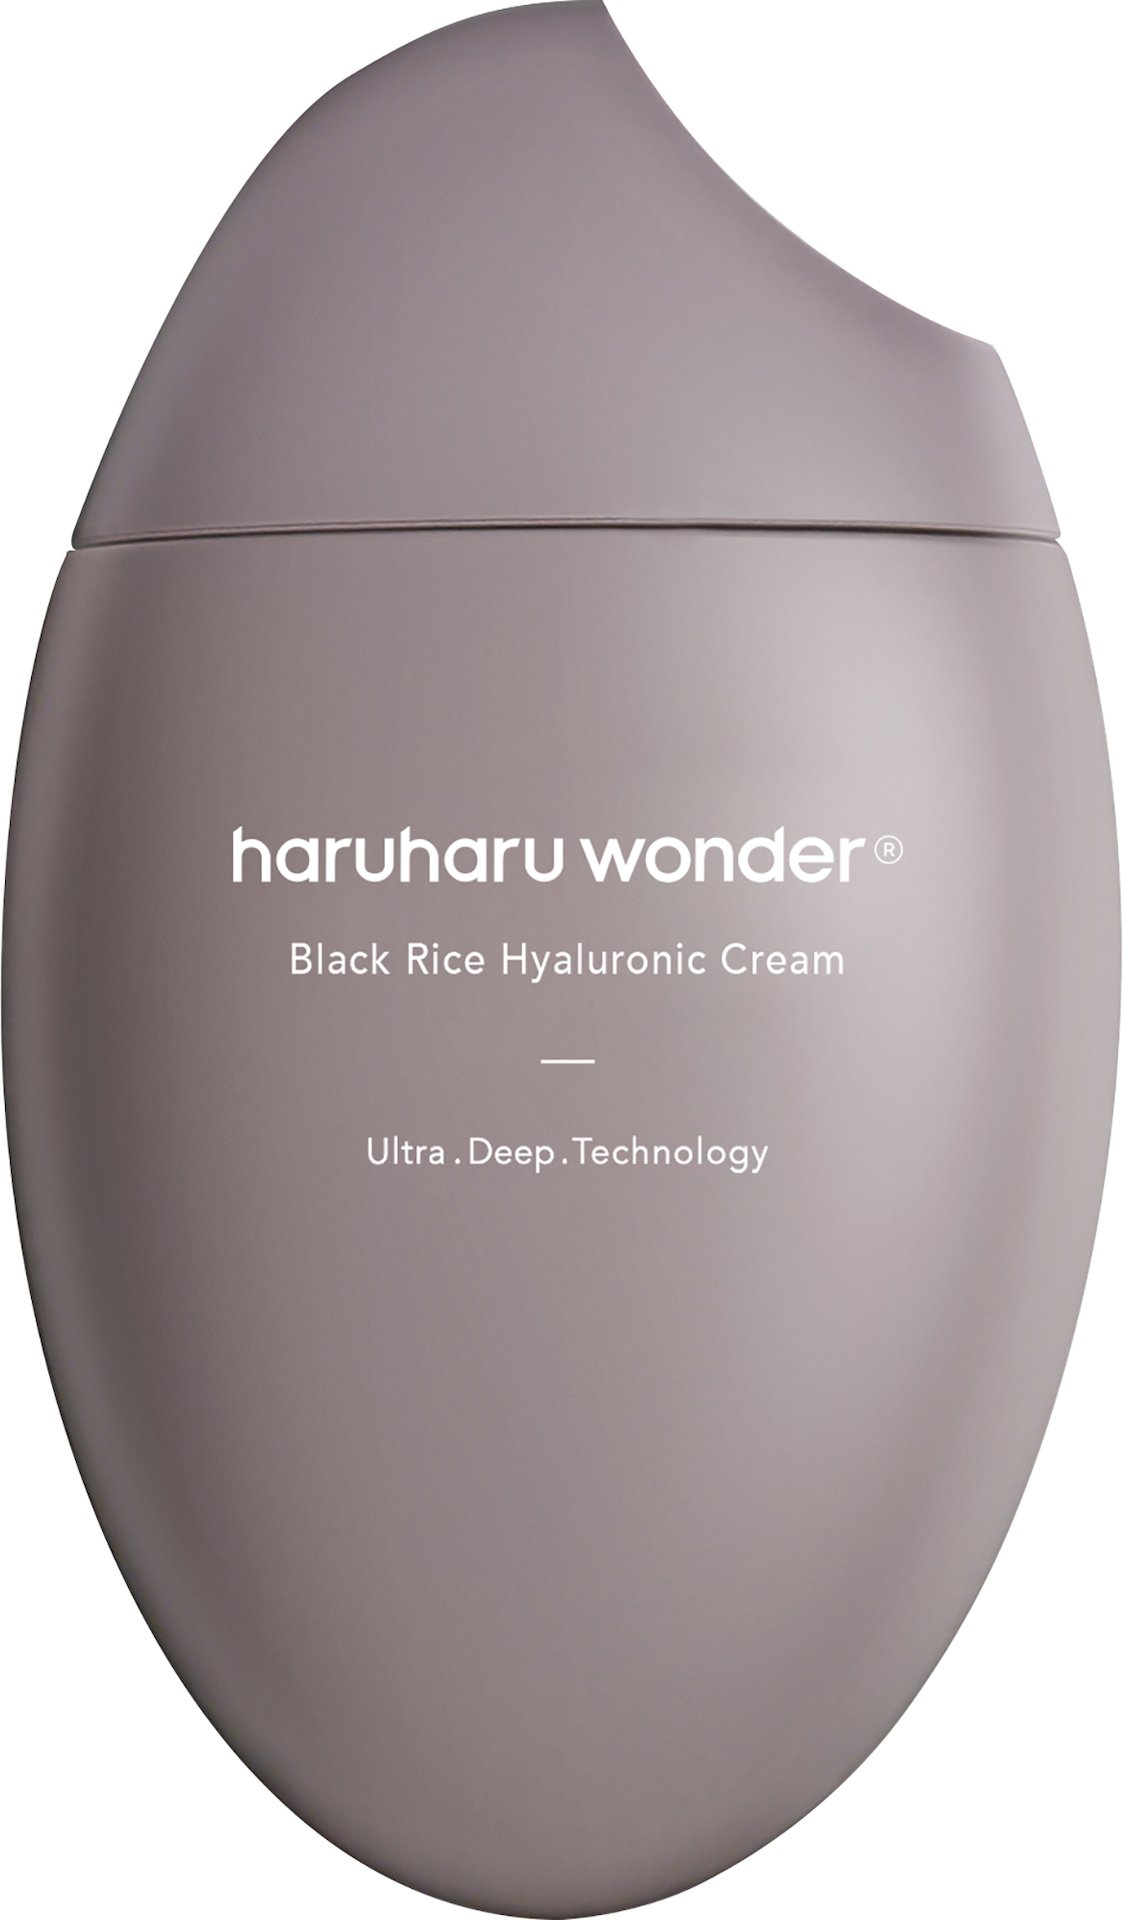 Haruharu Wonder Black Rice Hyaluronic Cream (50ml)